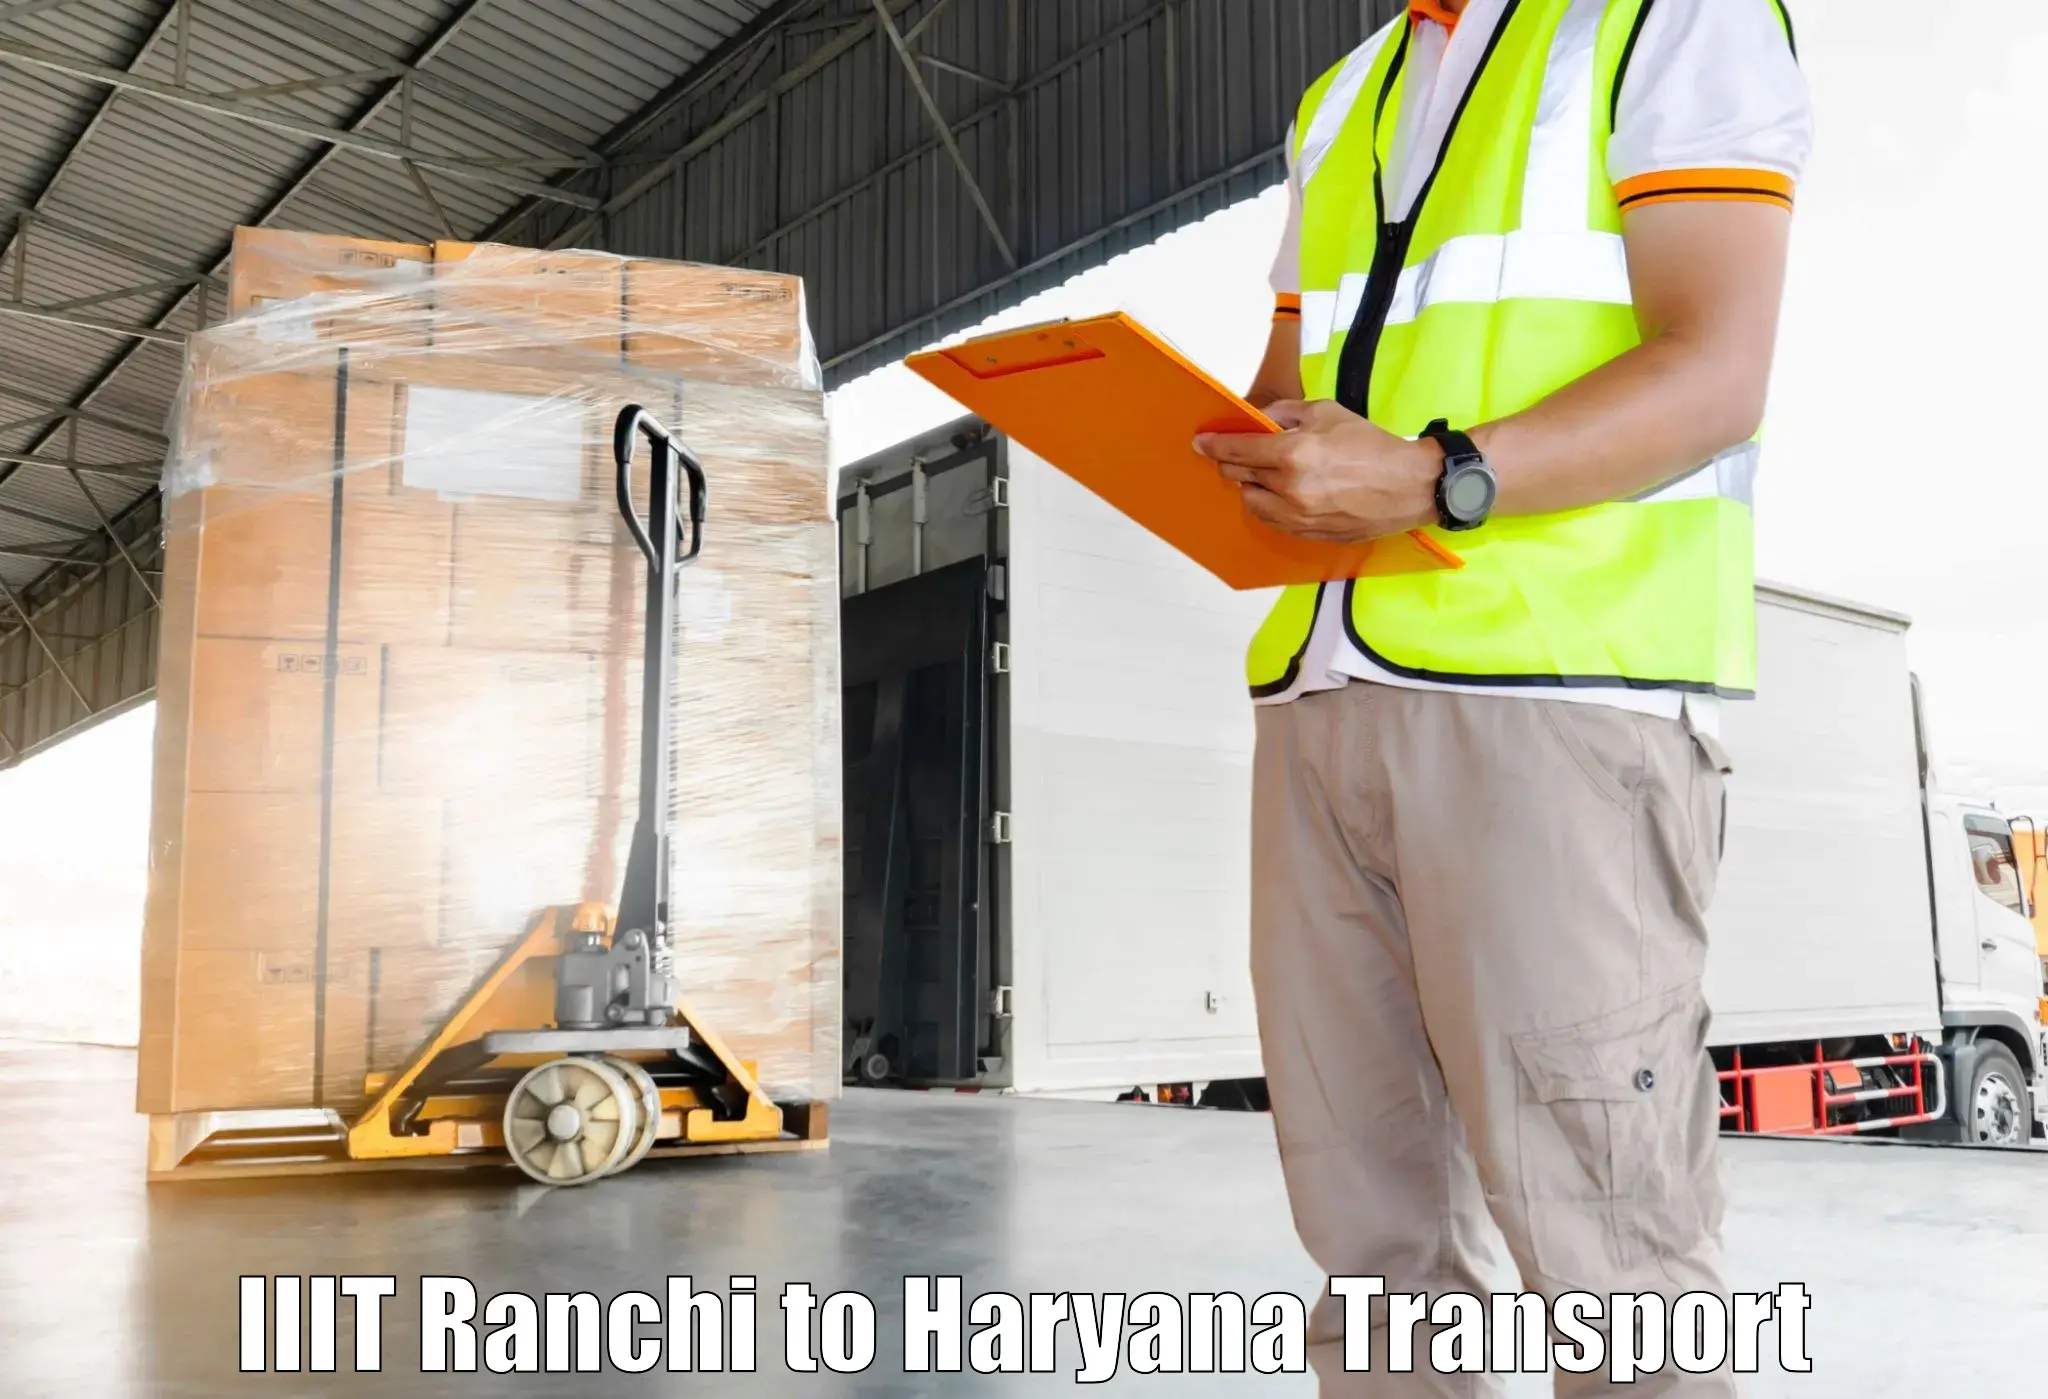 Transport in sharing IIIT Ranchi to Hansi